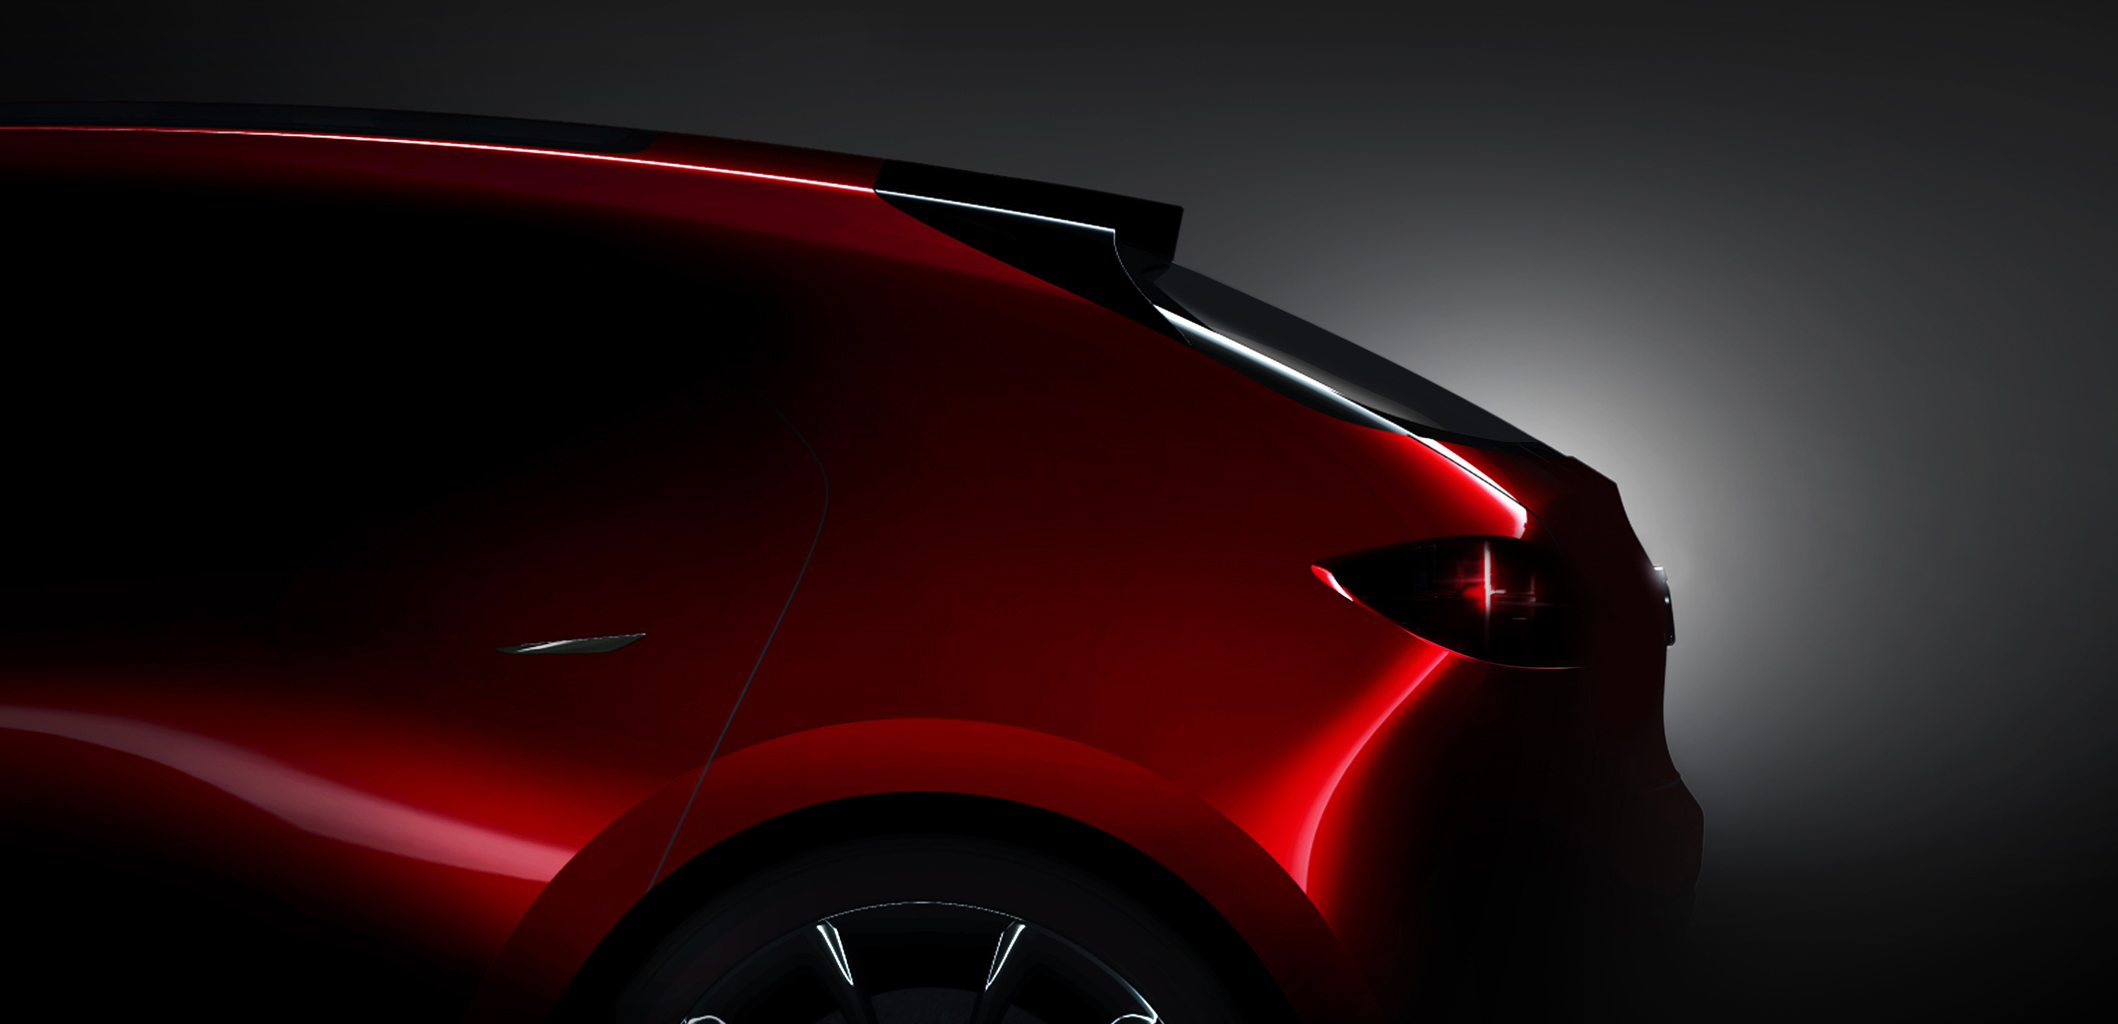 Mazda Vision, HyperEconiq Ioniq, & GM Self-Driving